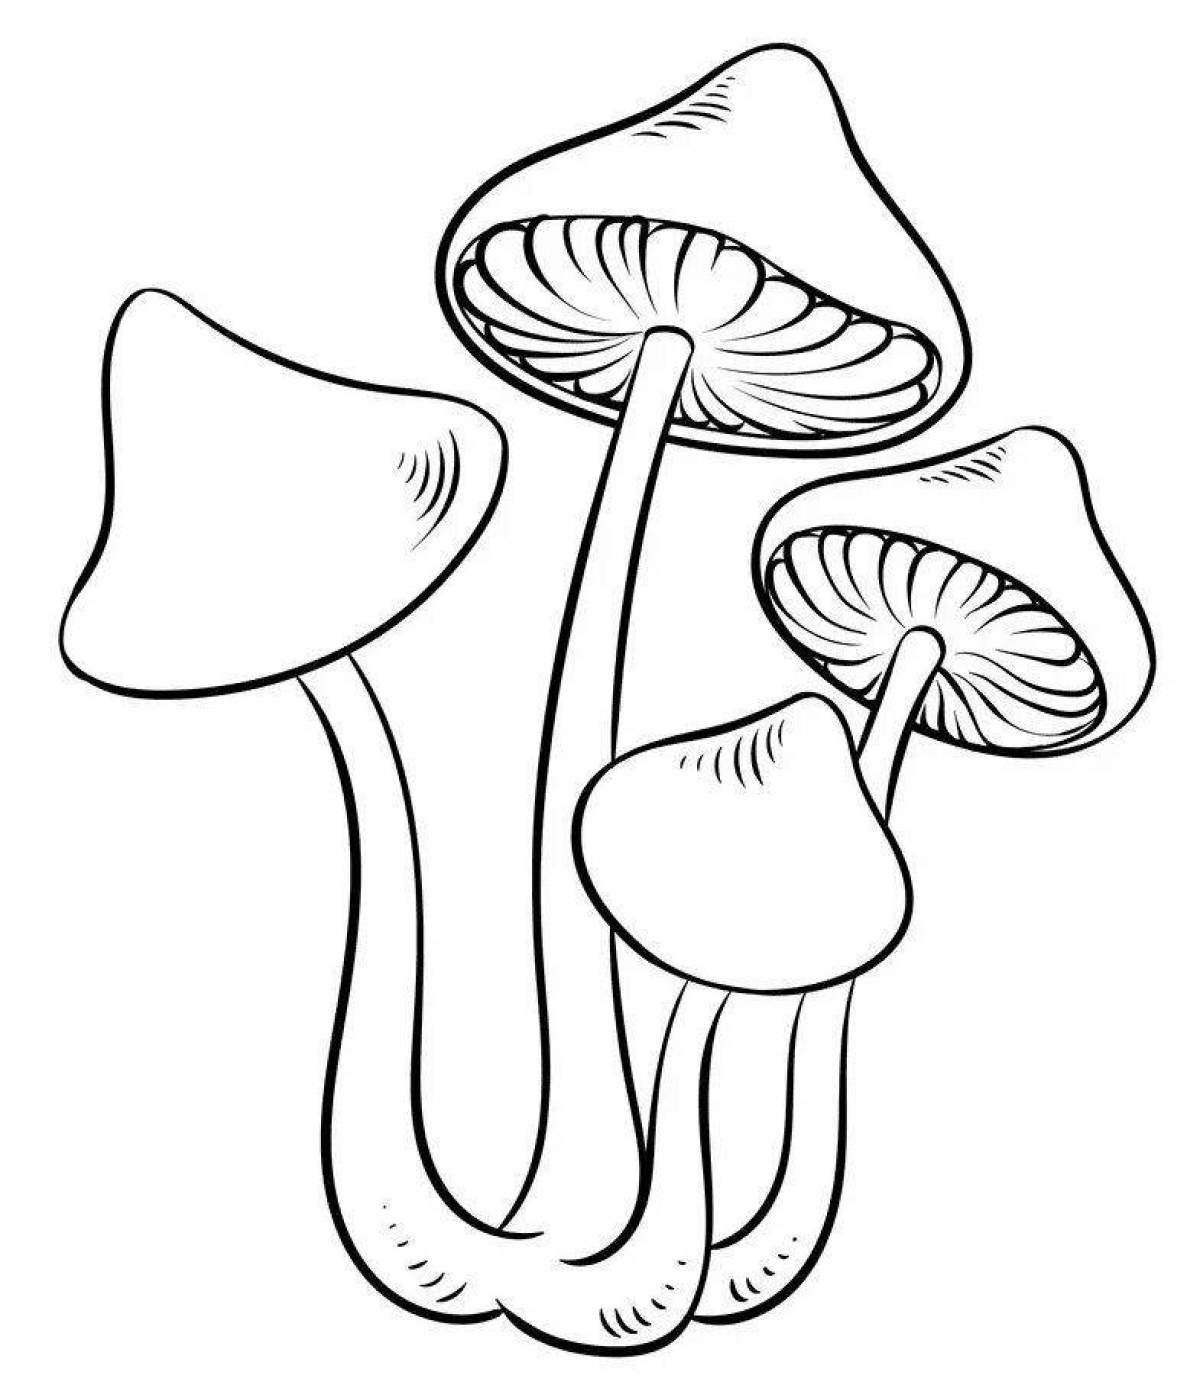 Fat honey mushroom coloring page